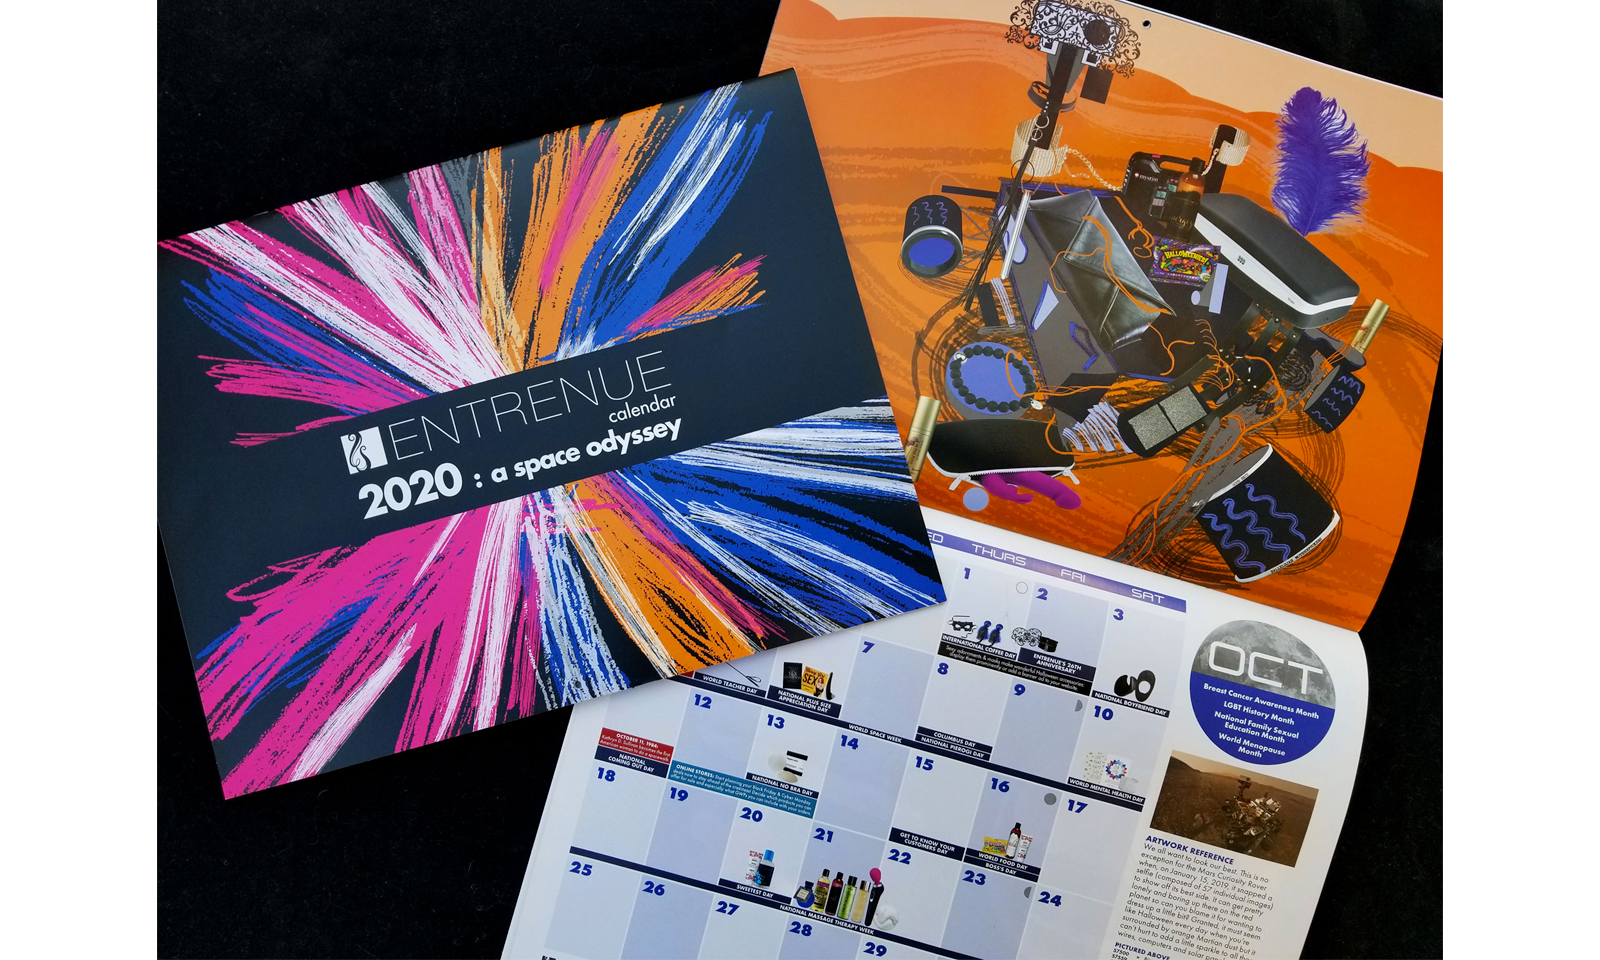 Entrenue Debuts ‘Space Odyssey’ Themed 2020 Calendar